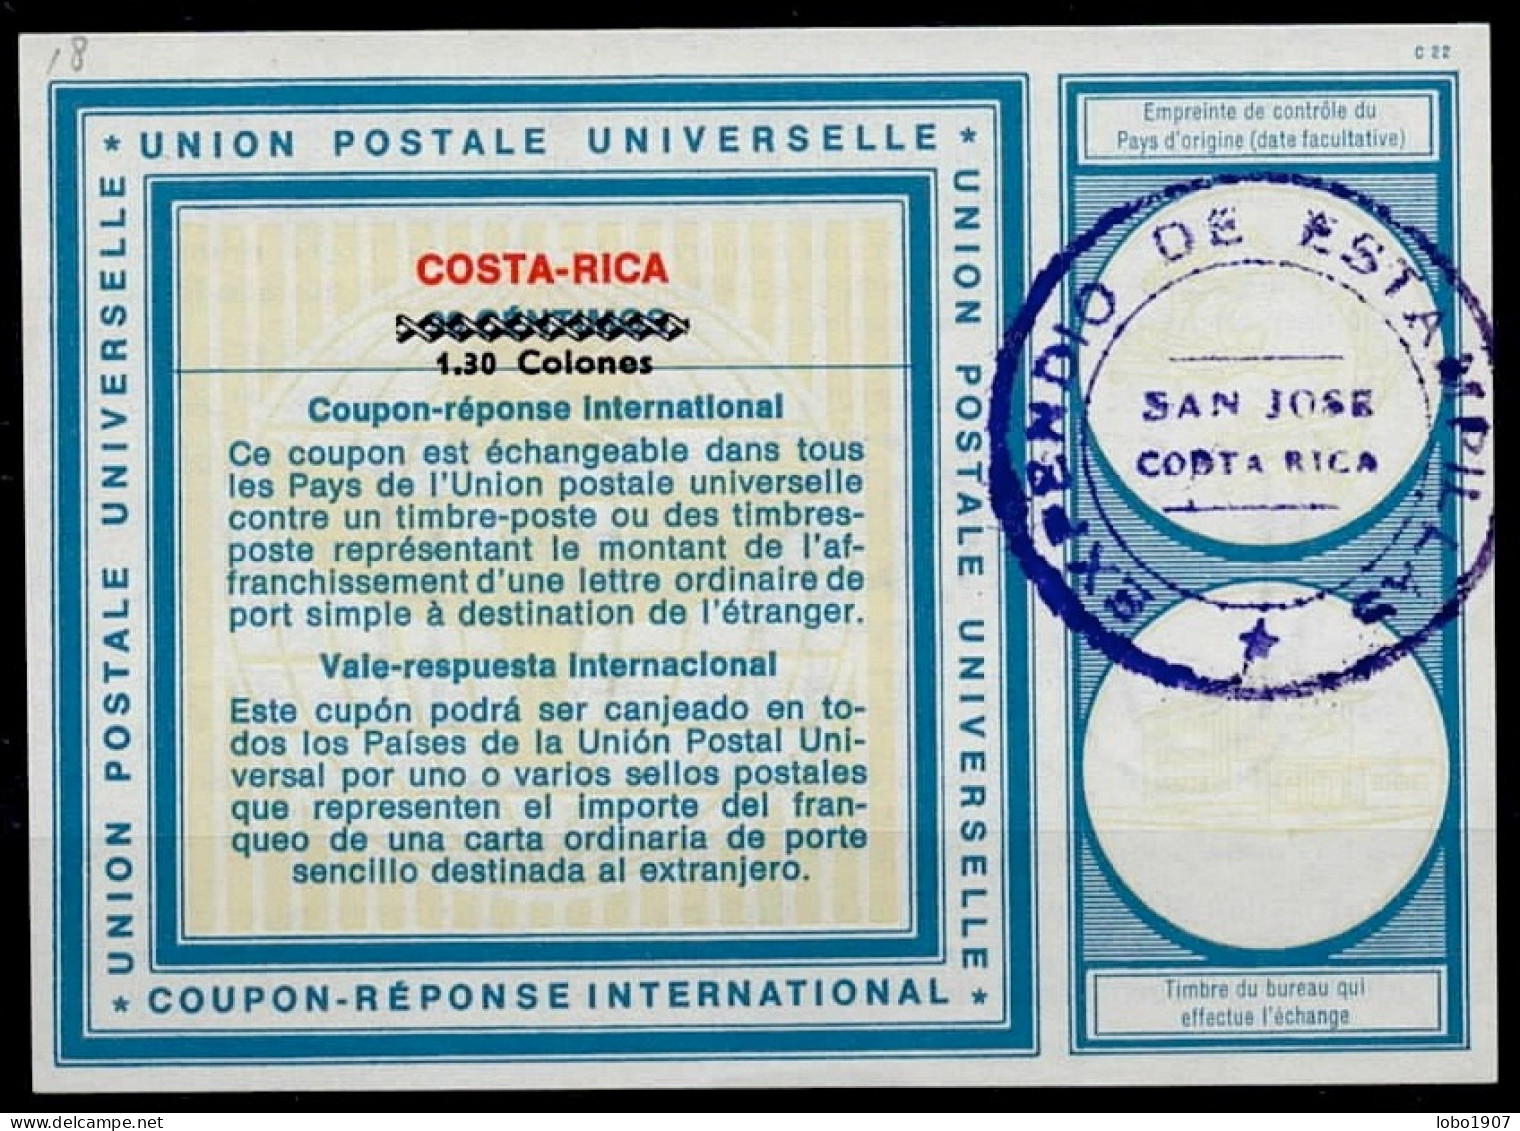 COSTA RICA  Vi18  1.30 Colones / 90 CENTAVOS  Int. Reply Coupon Reponse Antwortschein IAS IRC VALE RESPUESTA   SAN JOSÉ - Costa Rica